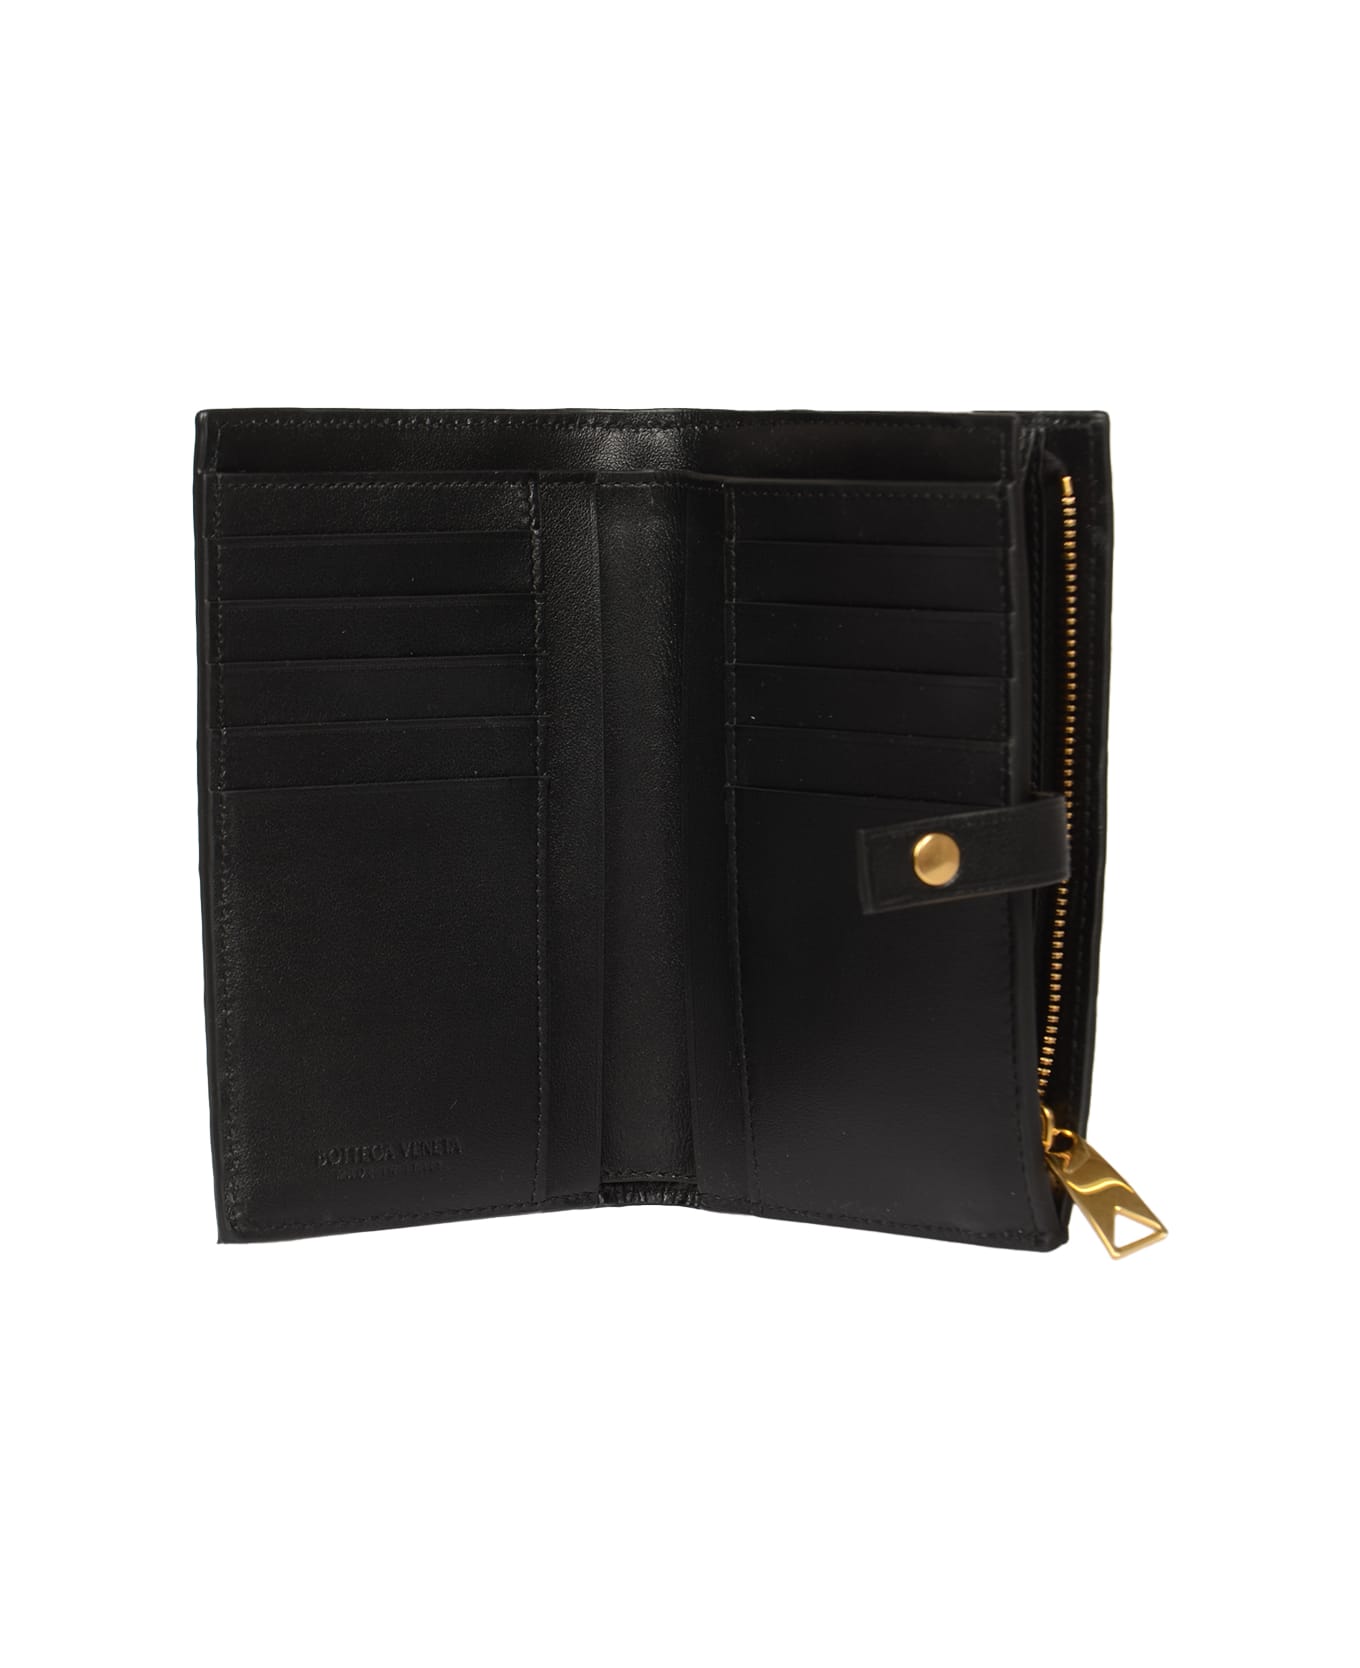 Bottega Veneta Weave Buttoned Wallet - Black/Gold